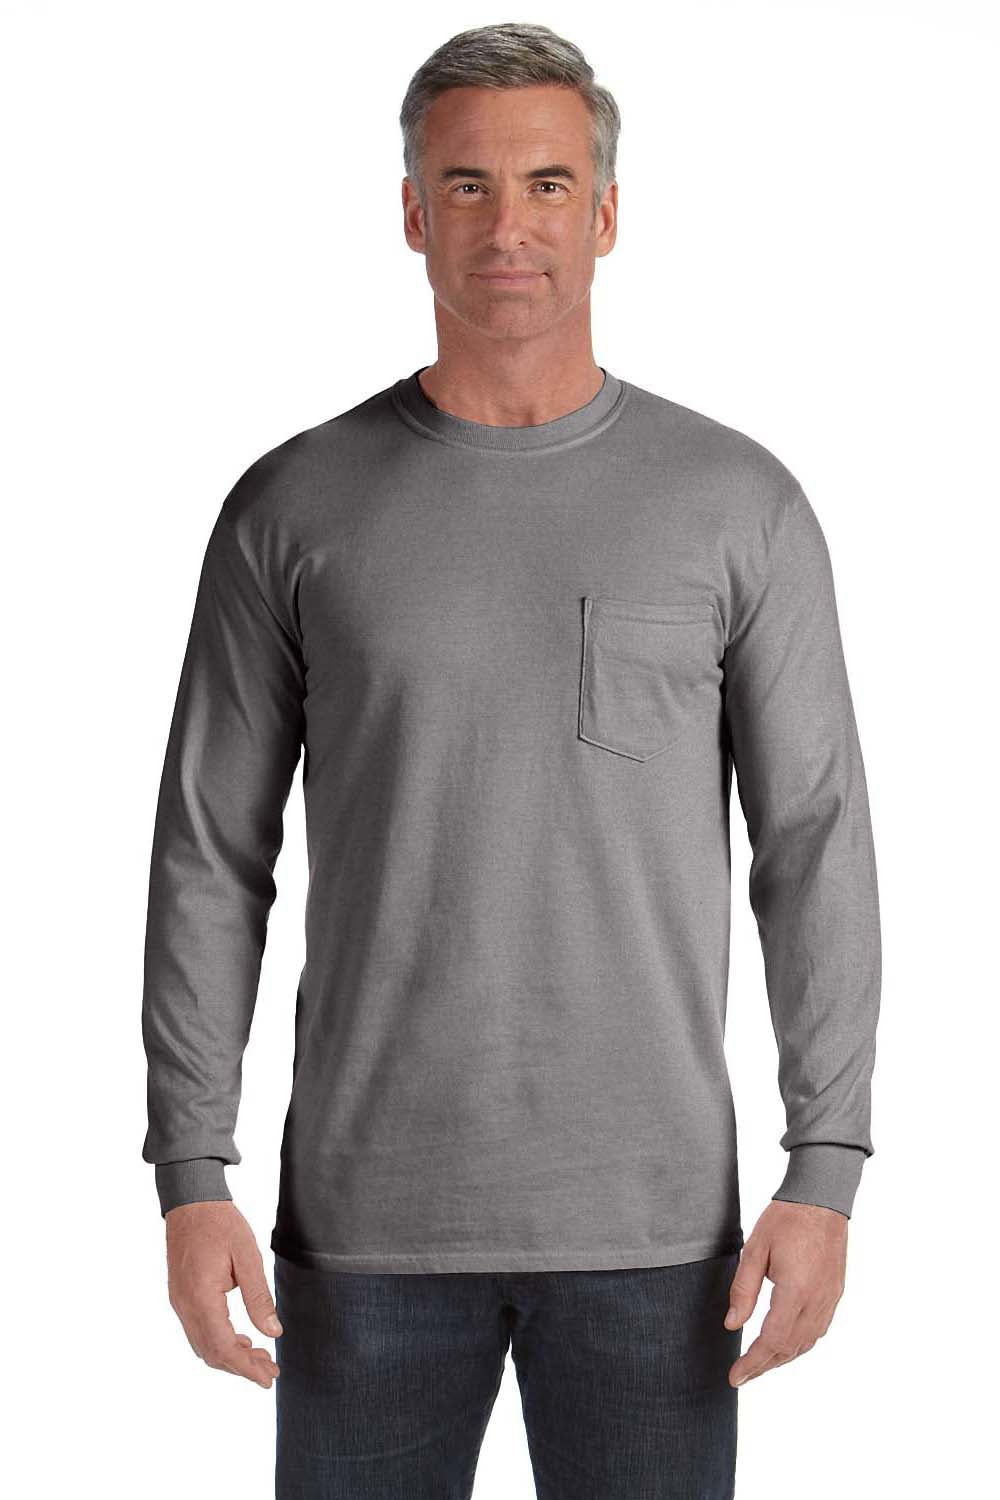 Comfort Colors C4410 Mens Long Sleeve Crewneck T-Shirt w/ Pocket Grey Front